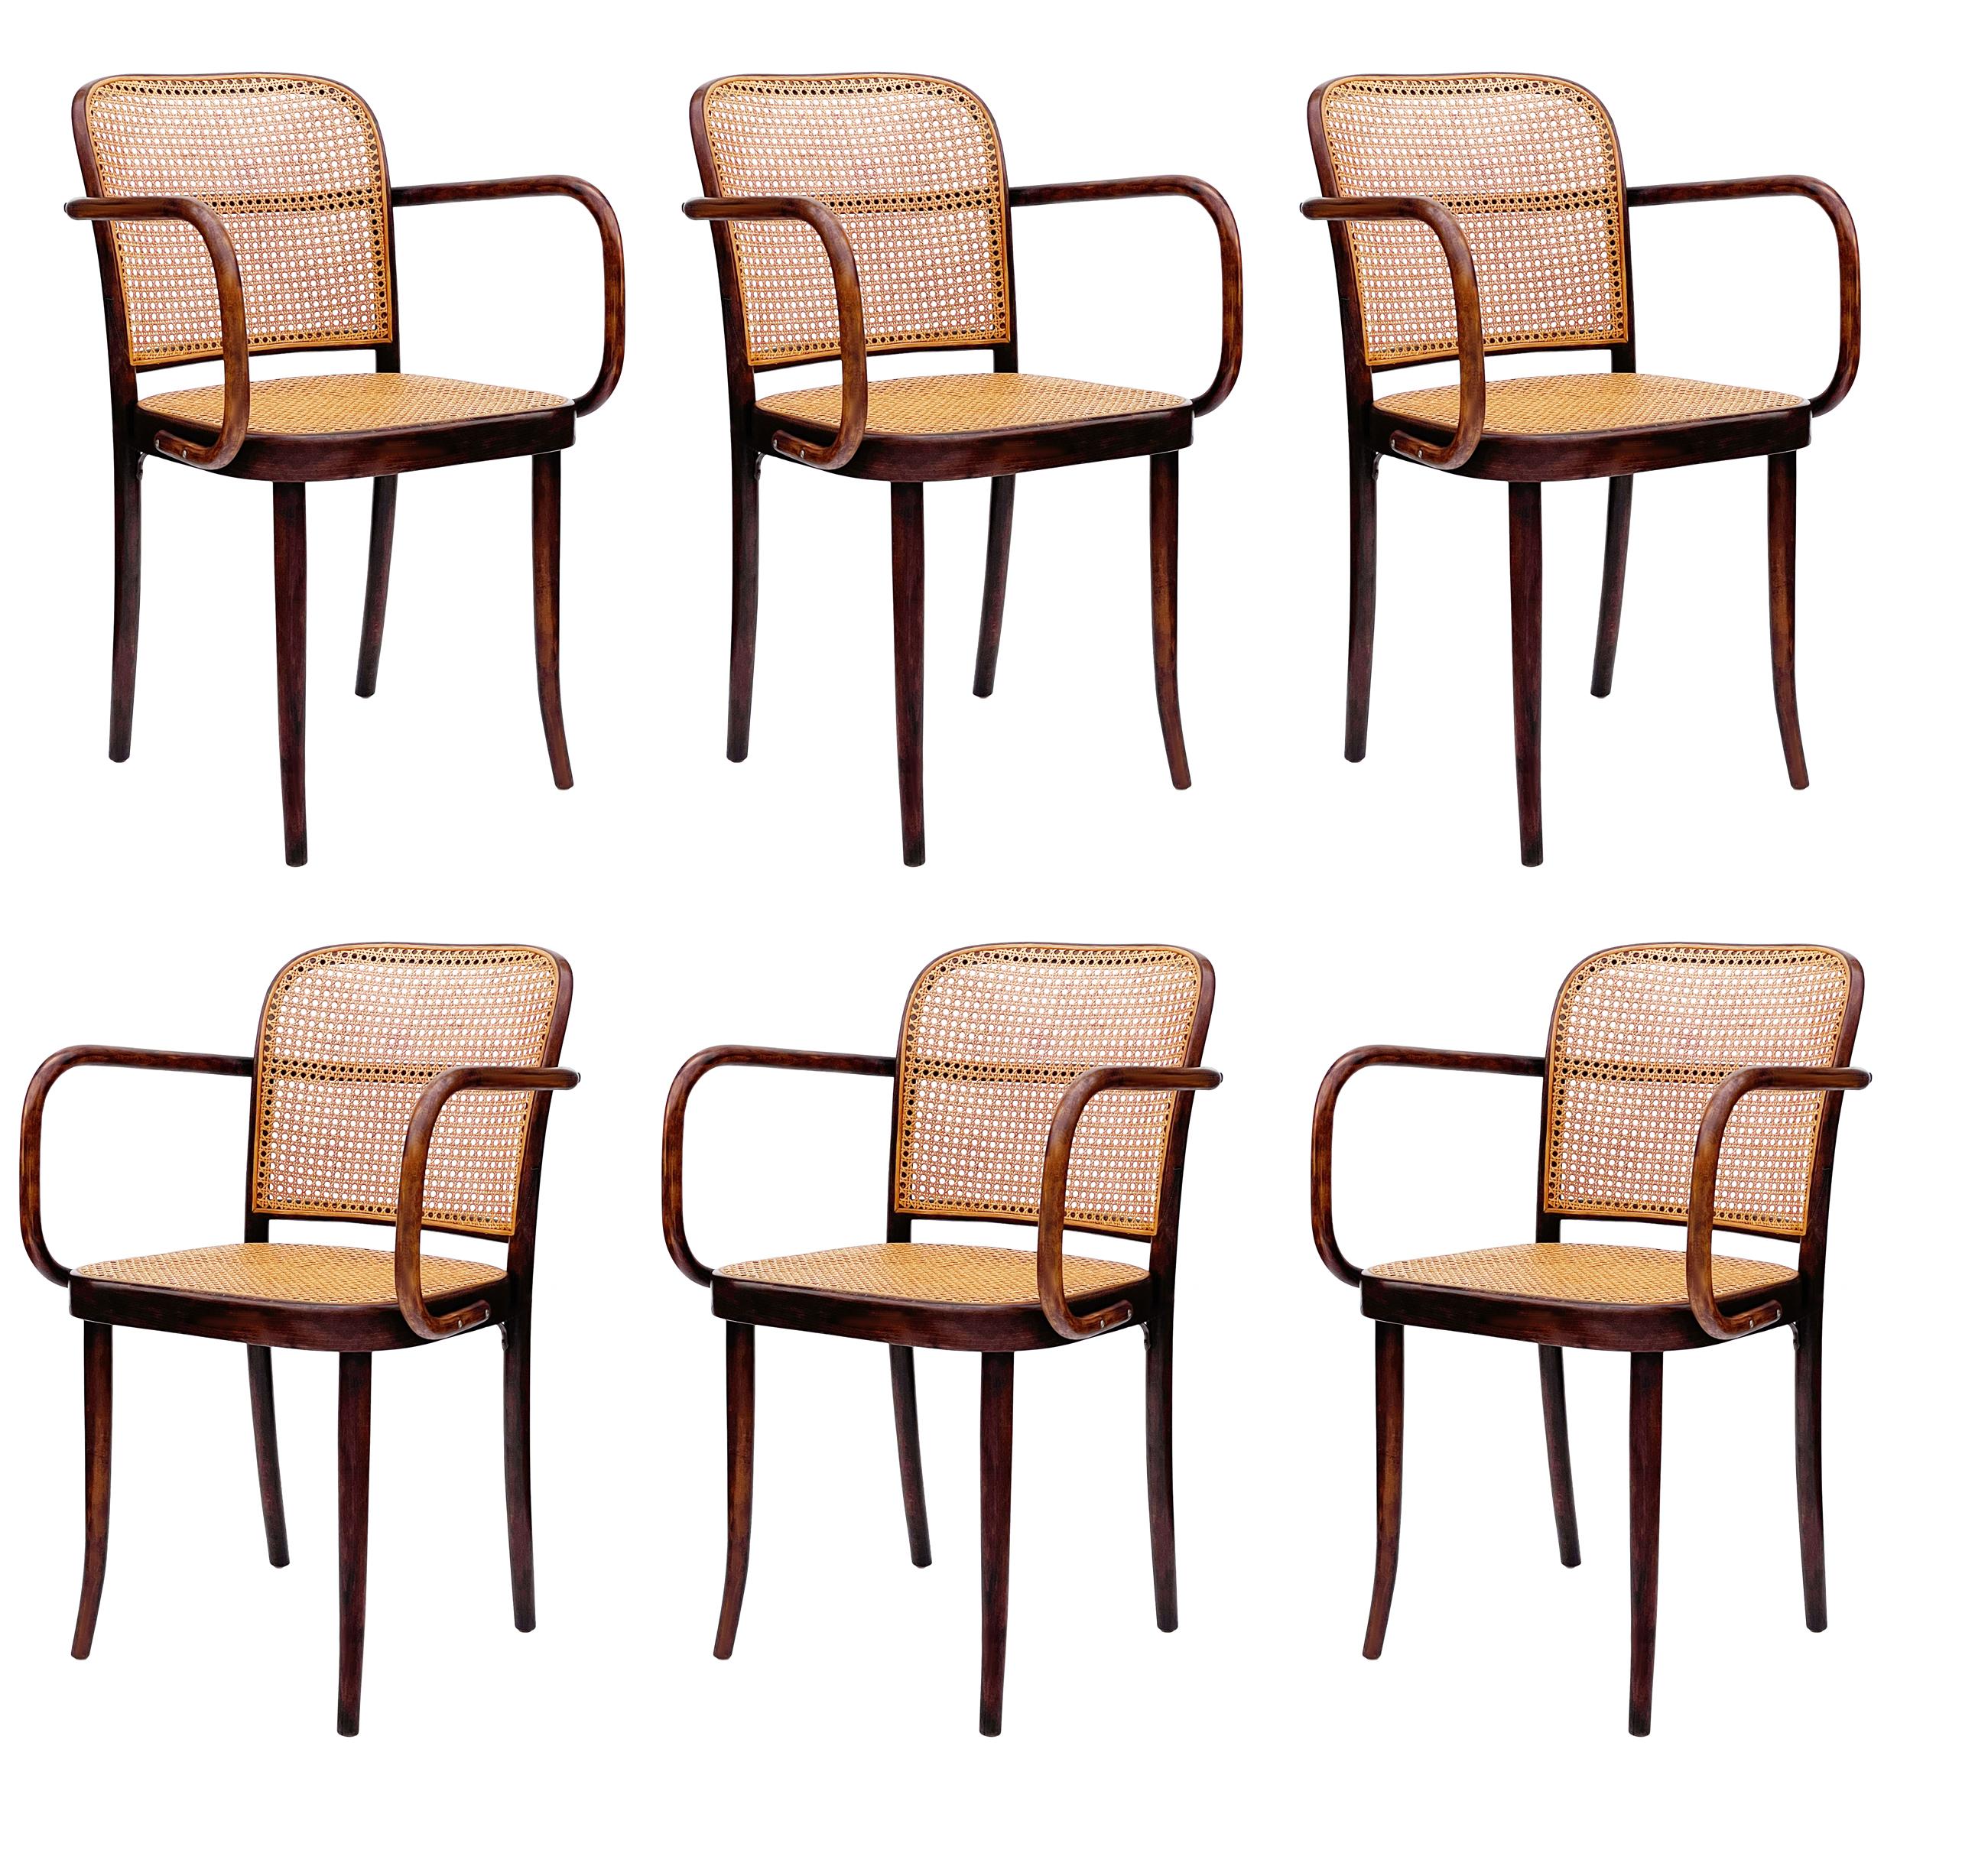 Set of 6 Mid-Century Modern Dining Prague Chairs by Josef Hoffmann Cane & Wood 1